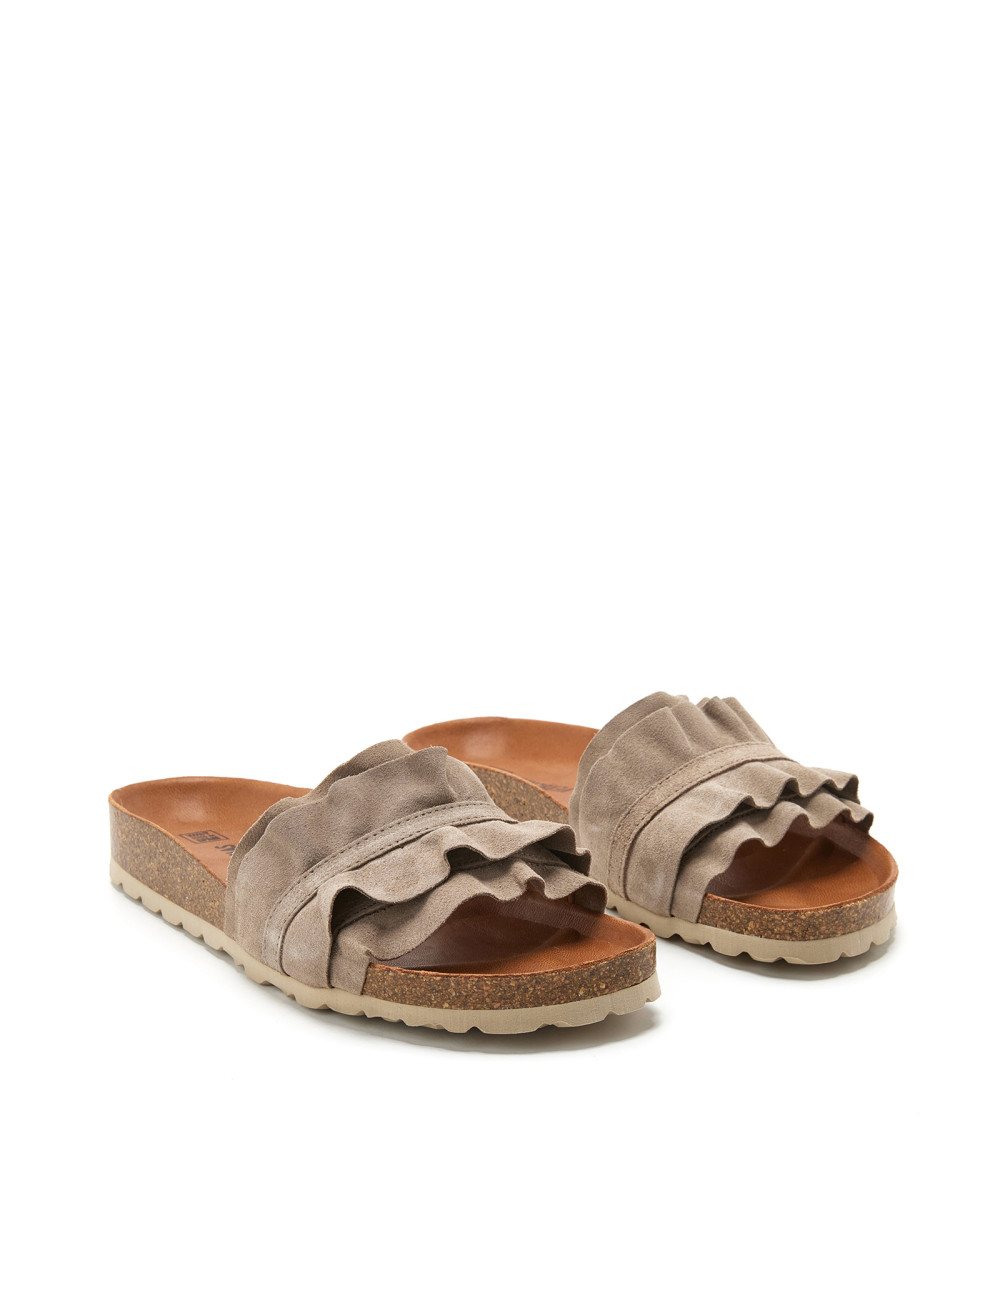 Bio Bio Sandals Womens 7.5 Brown Made in Spain Criss Cross Leather Wedge  Slides | eBay